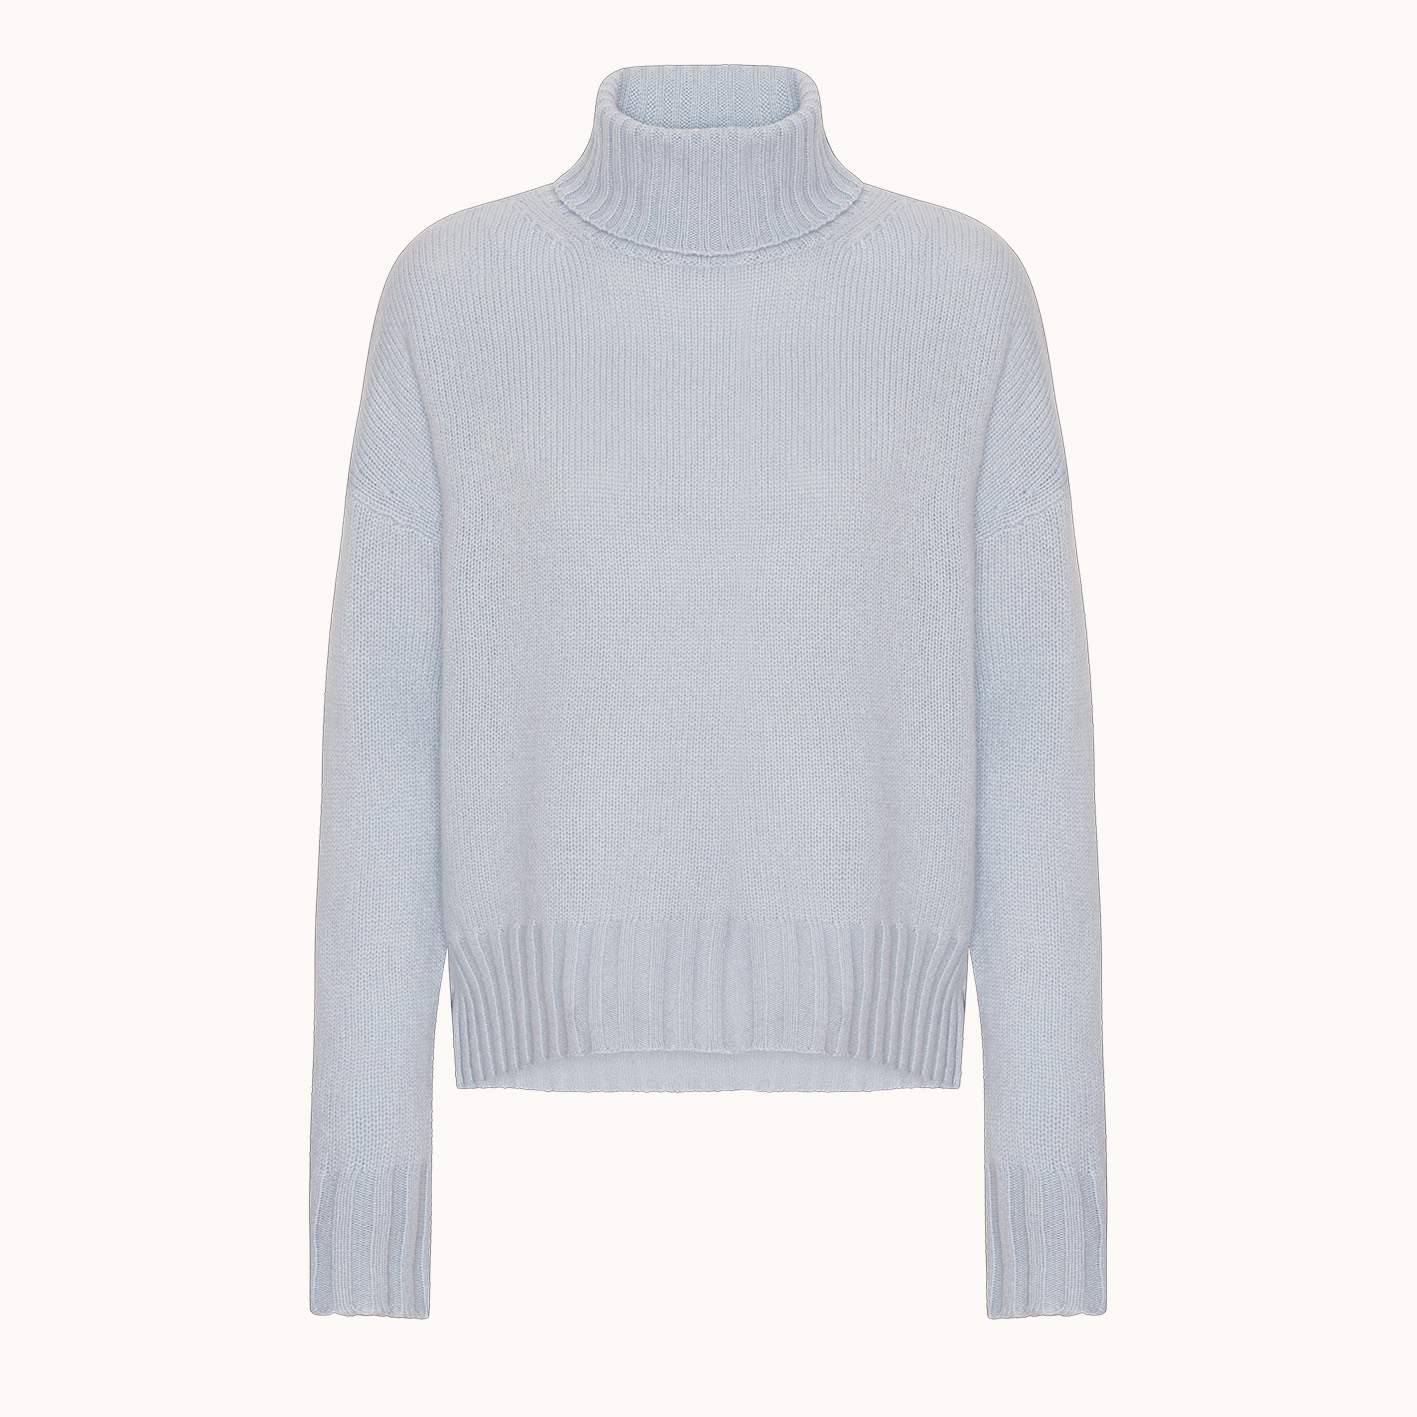 Classic cashmere turtleneck sweater in Sky blue from Wuth Copenhagen in 100% premium cashmere